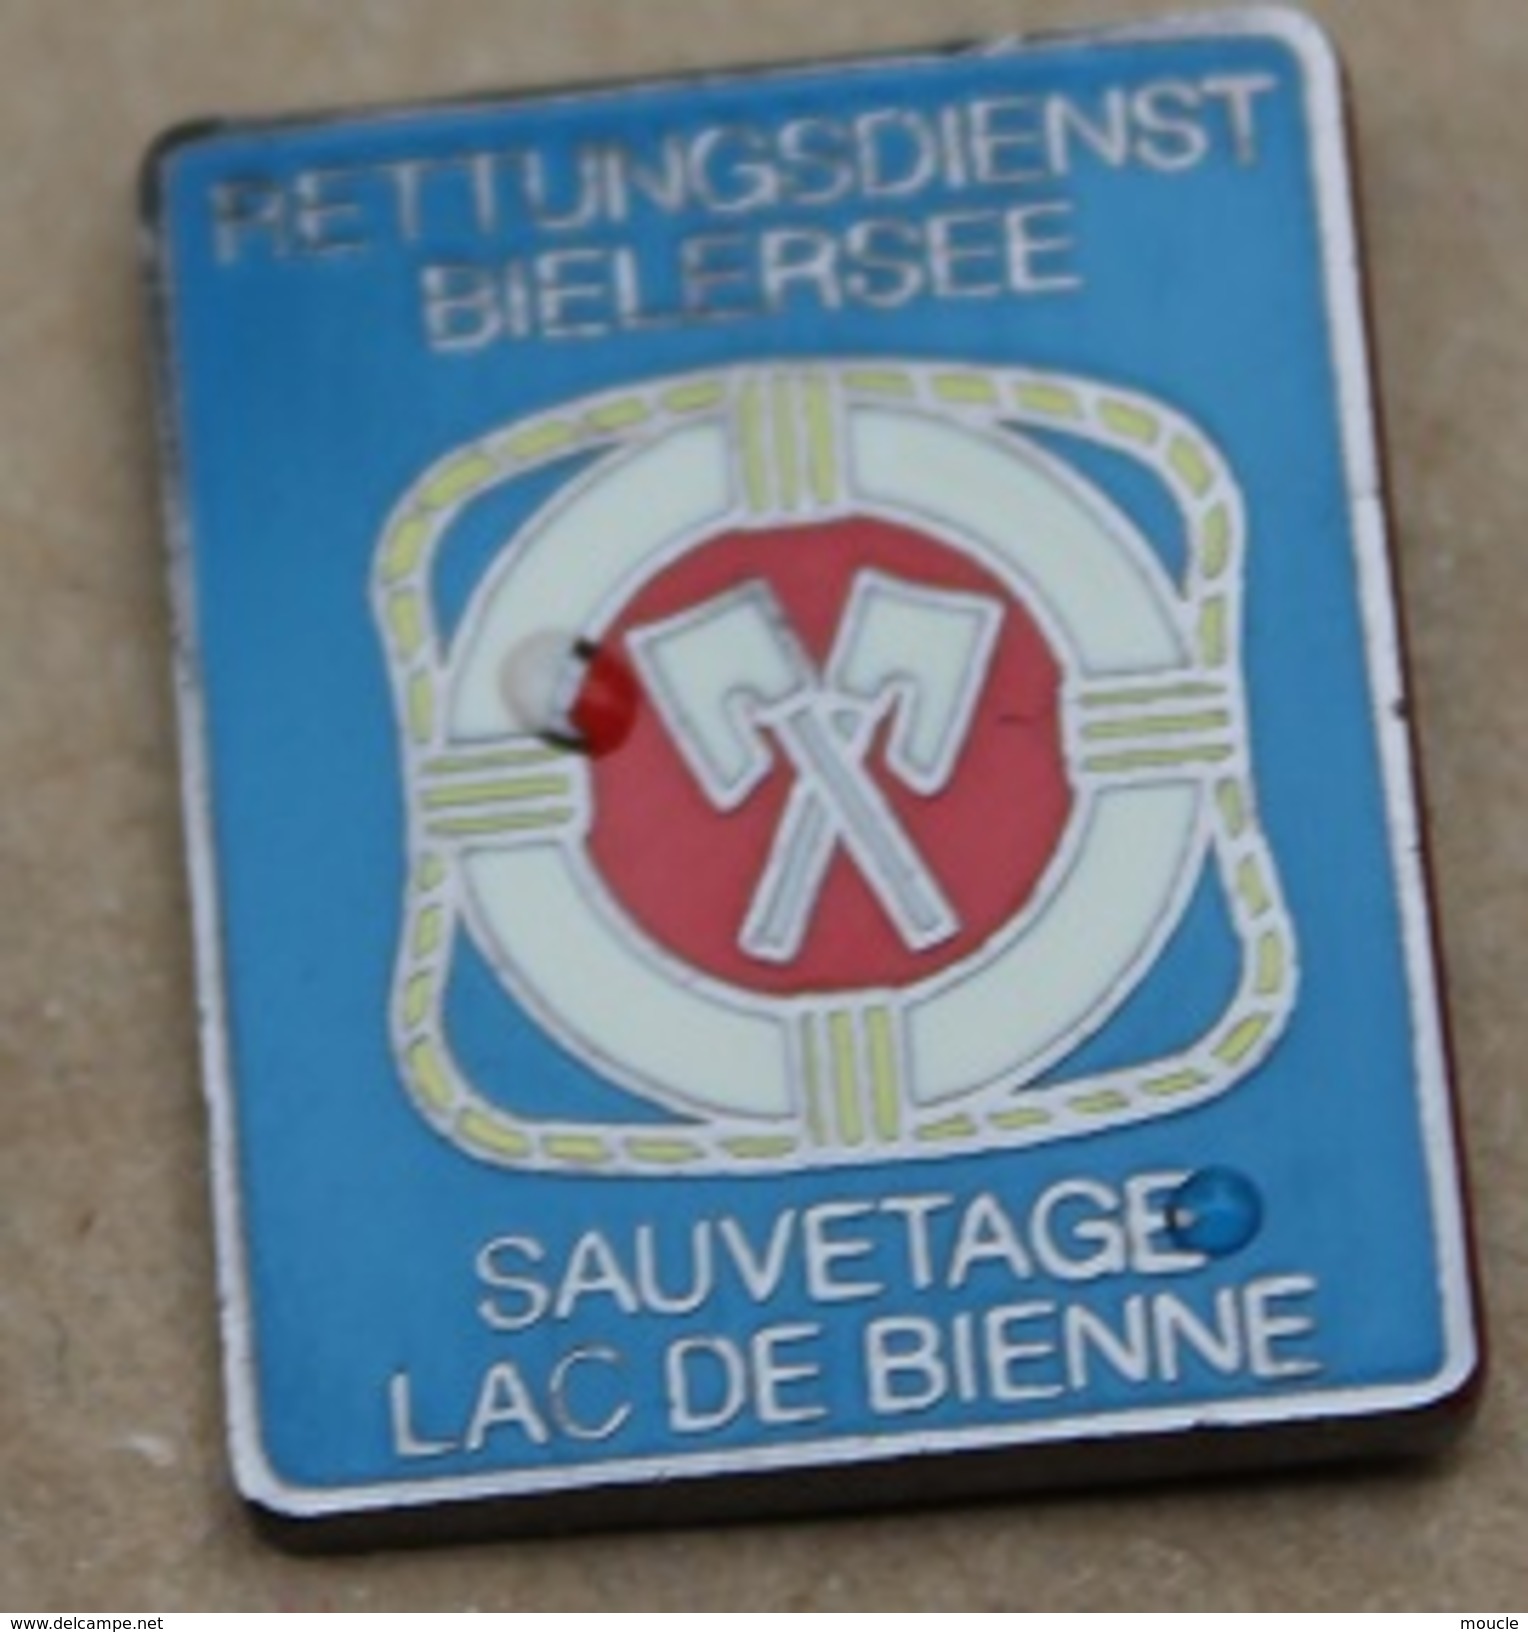 SAUVETAGE LA DE BIENNE - RETTUNGSDIENST BIELERSEE - BOUEE  - SWISS - SUISSE - SCHWEIZ   -   (19) - Medizin